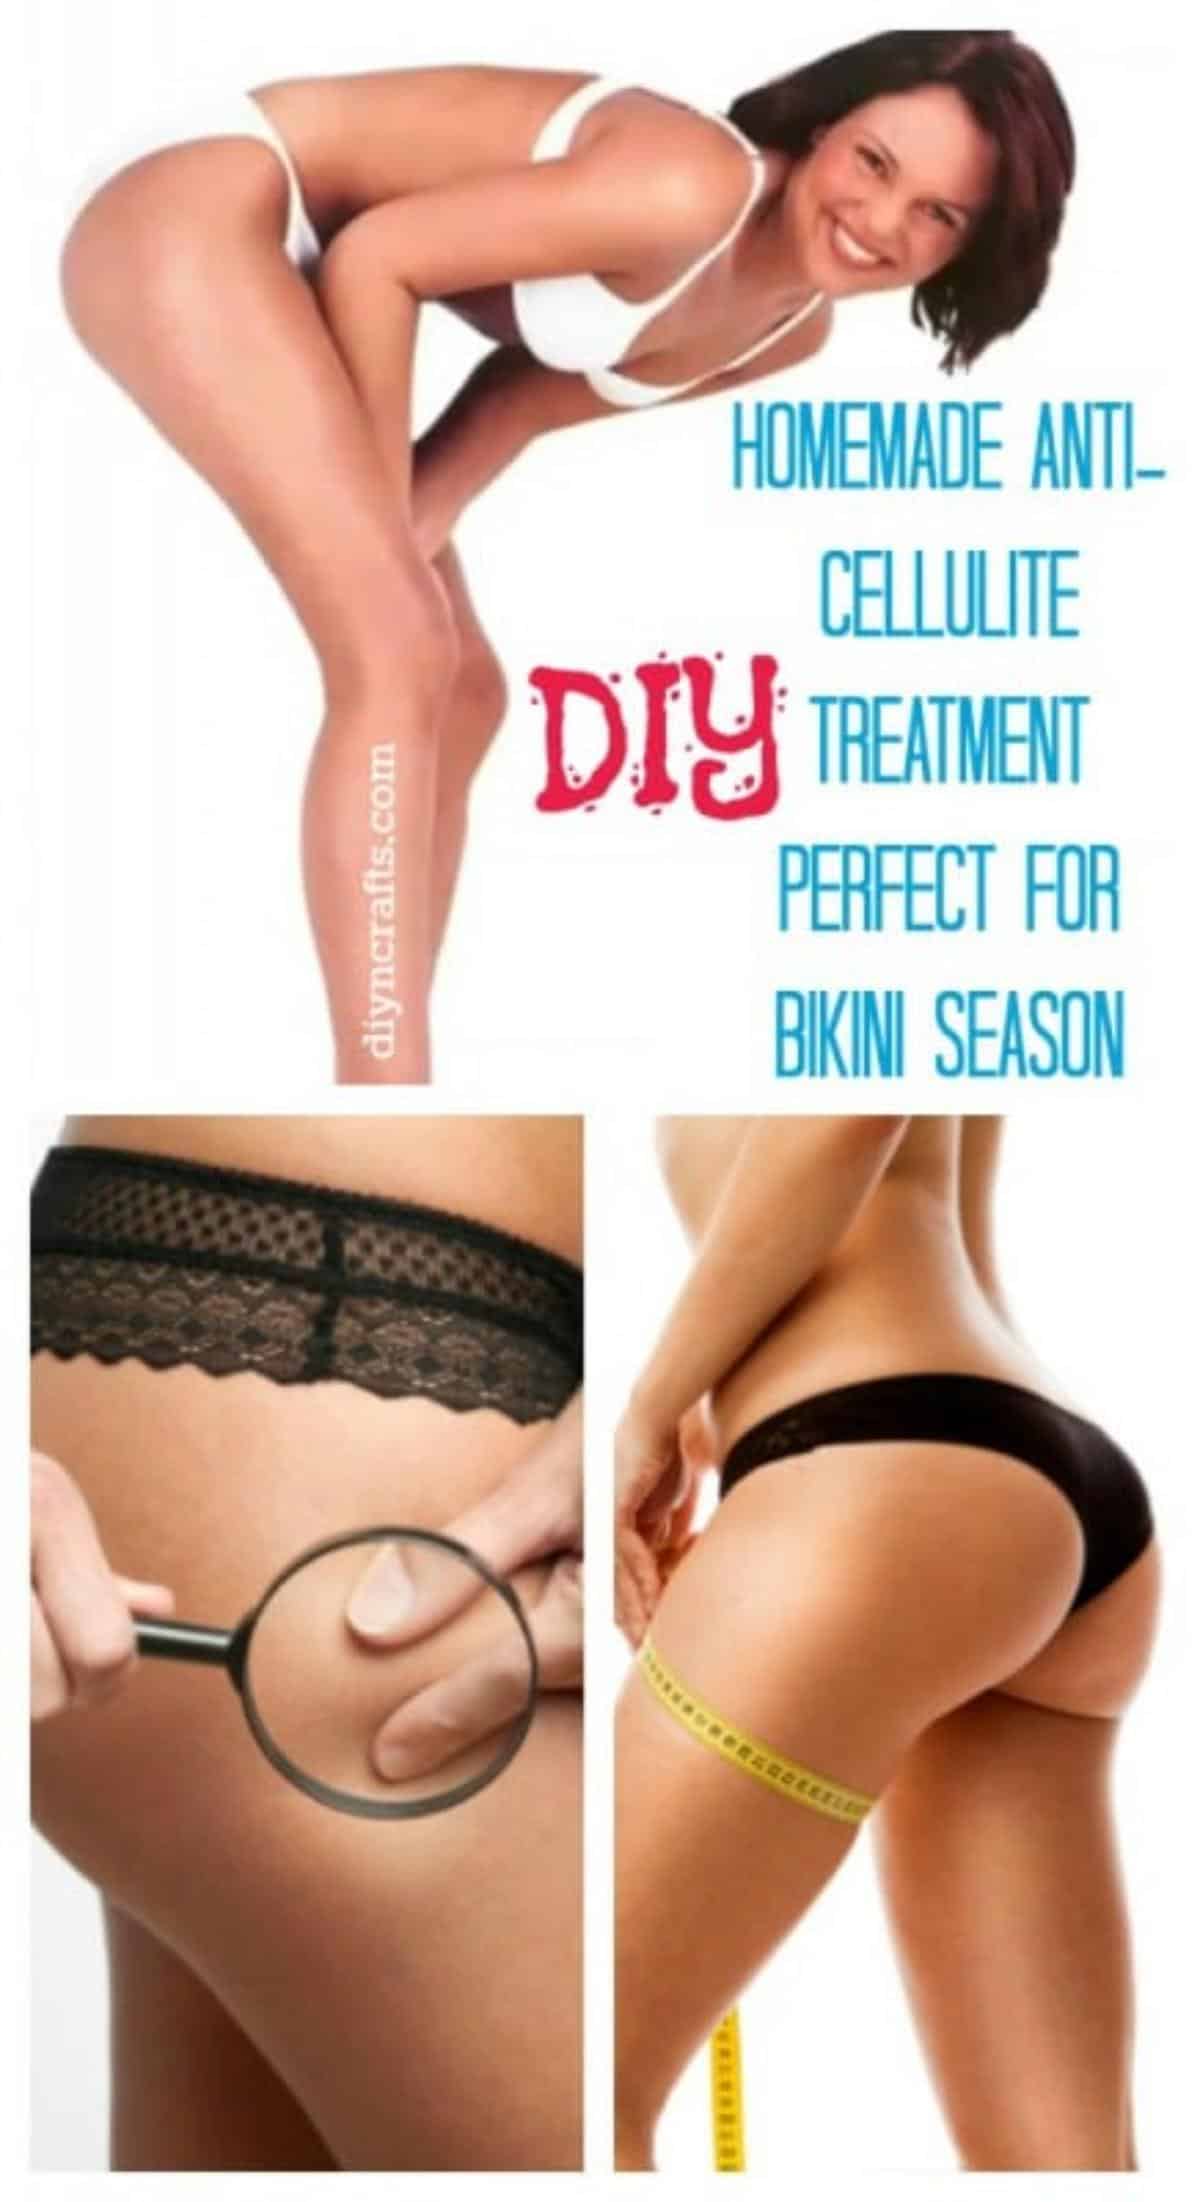 DIY Homemade Anti Cellulite Treatment collage.